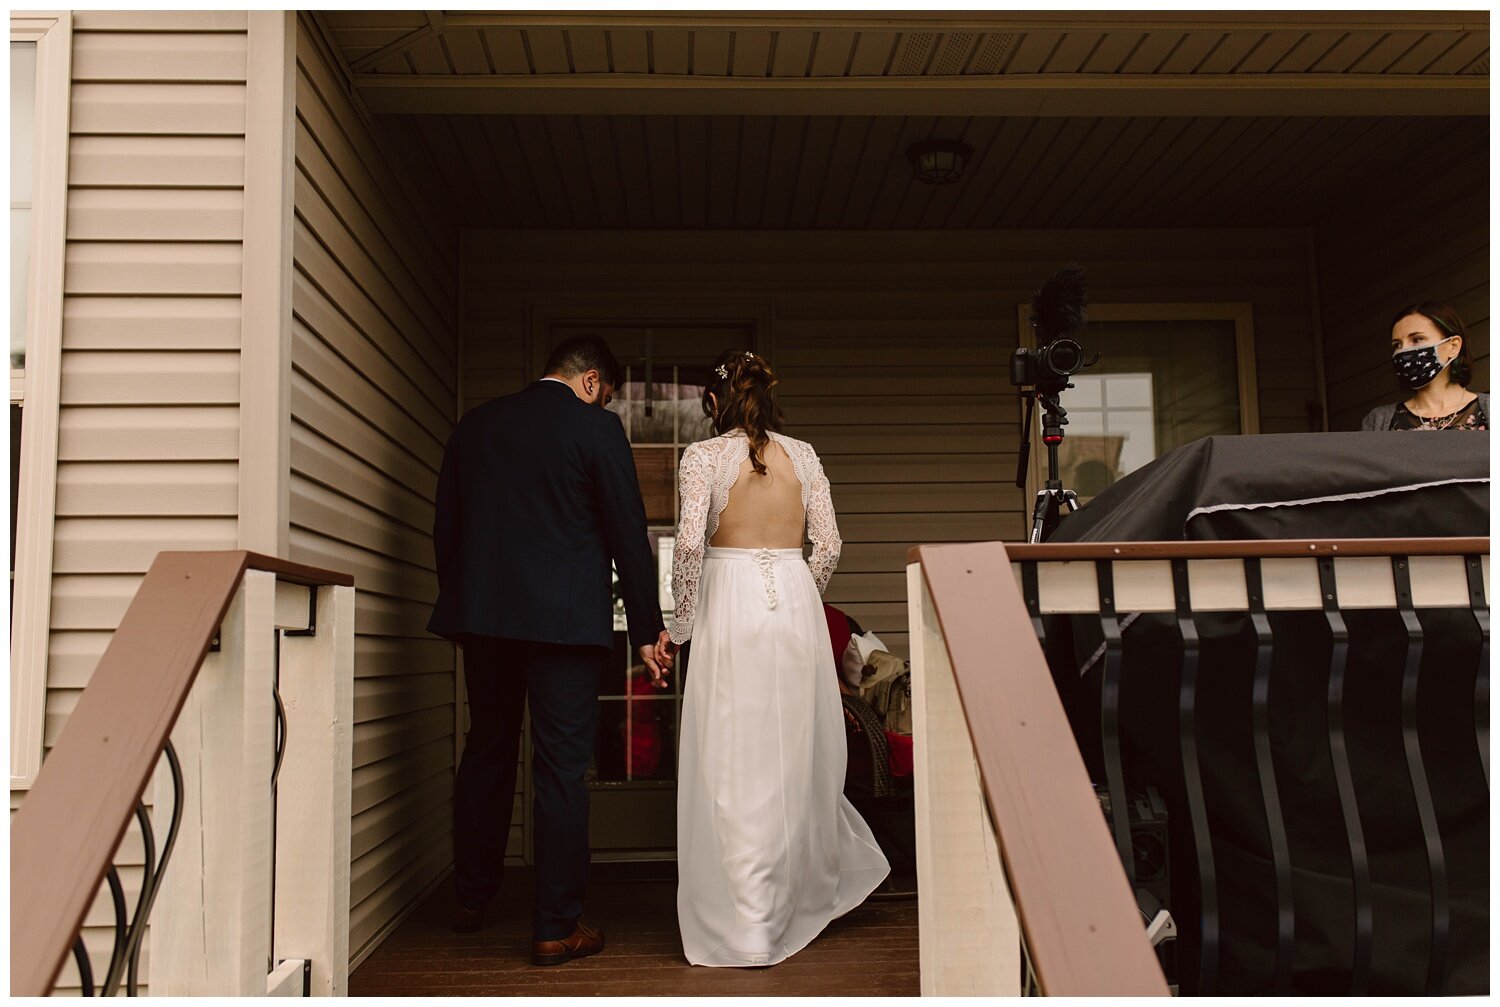 Kendra_Farris_Photography_intimate_wedding_photography_louisville-39.jpg